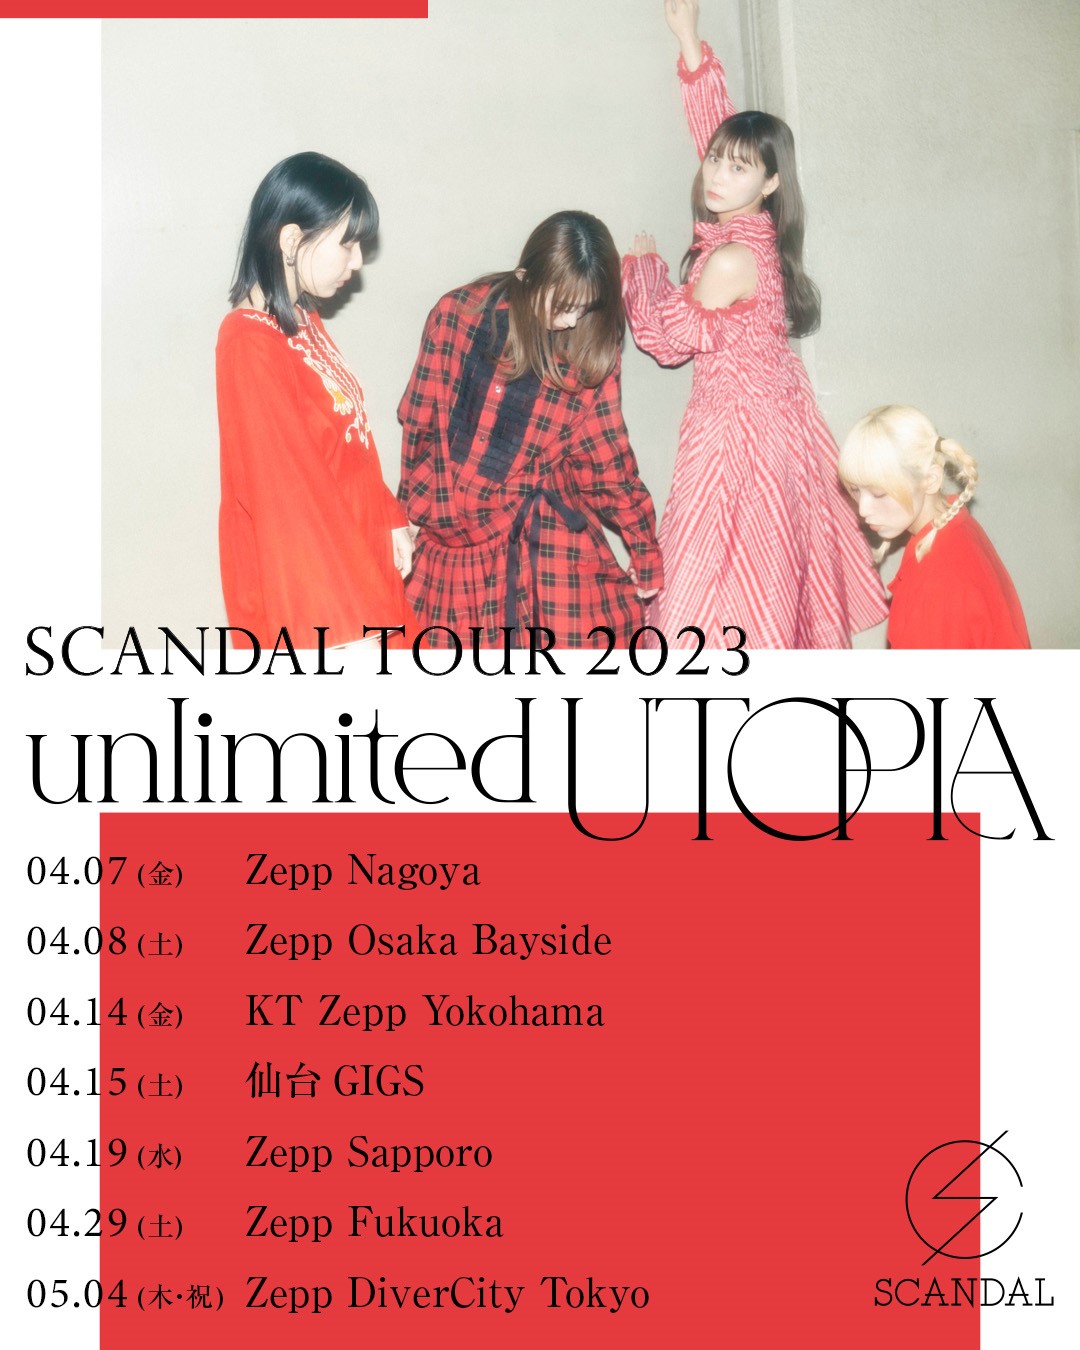 sc-tour-2023-unlimited-utopia_visual